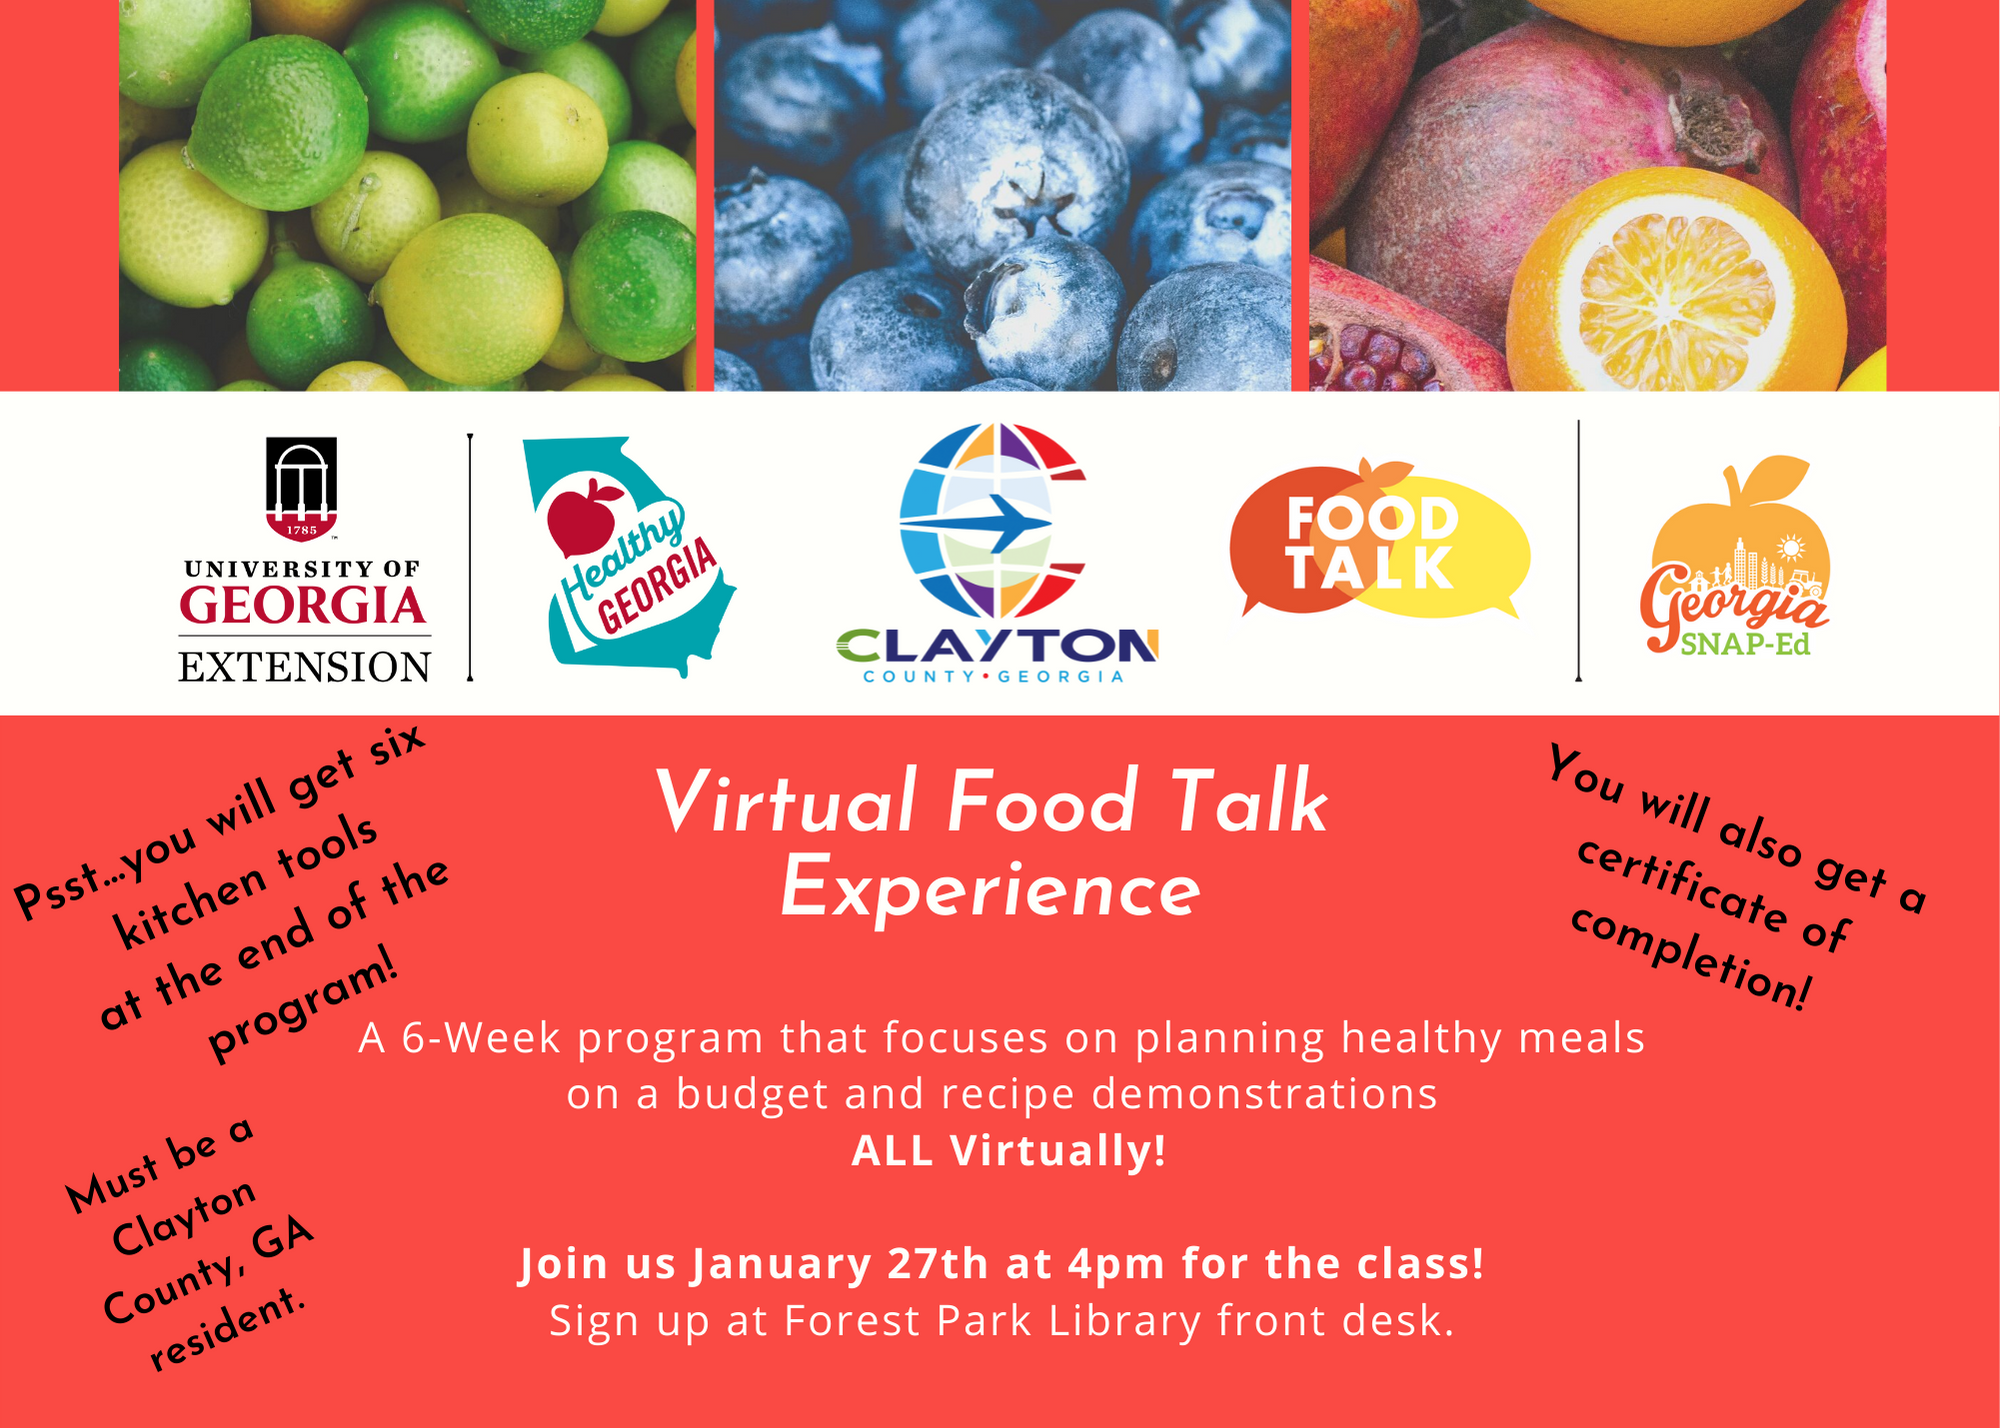 UGA Extension/CCLS Virtual Food Talk Experience